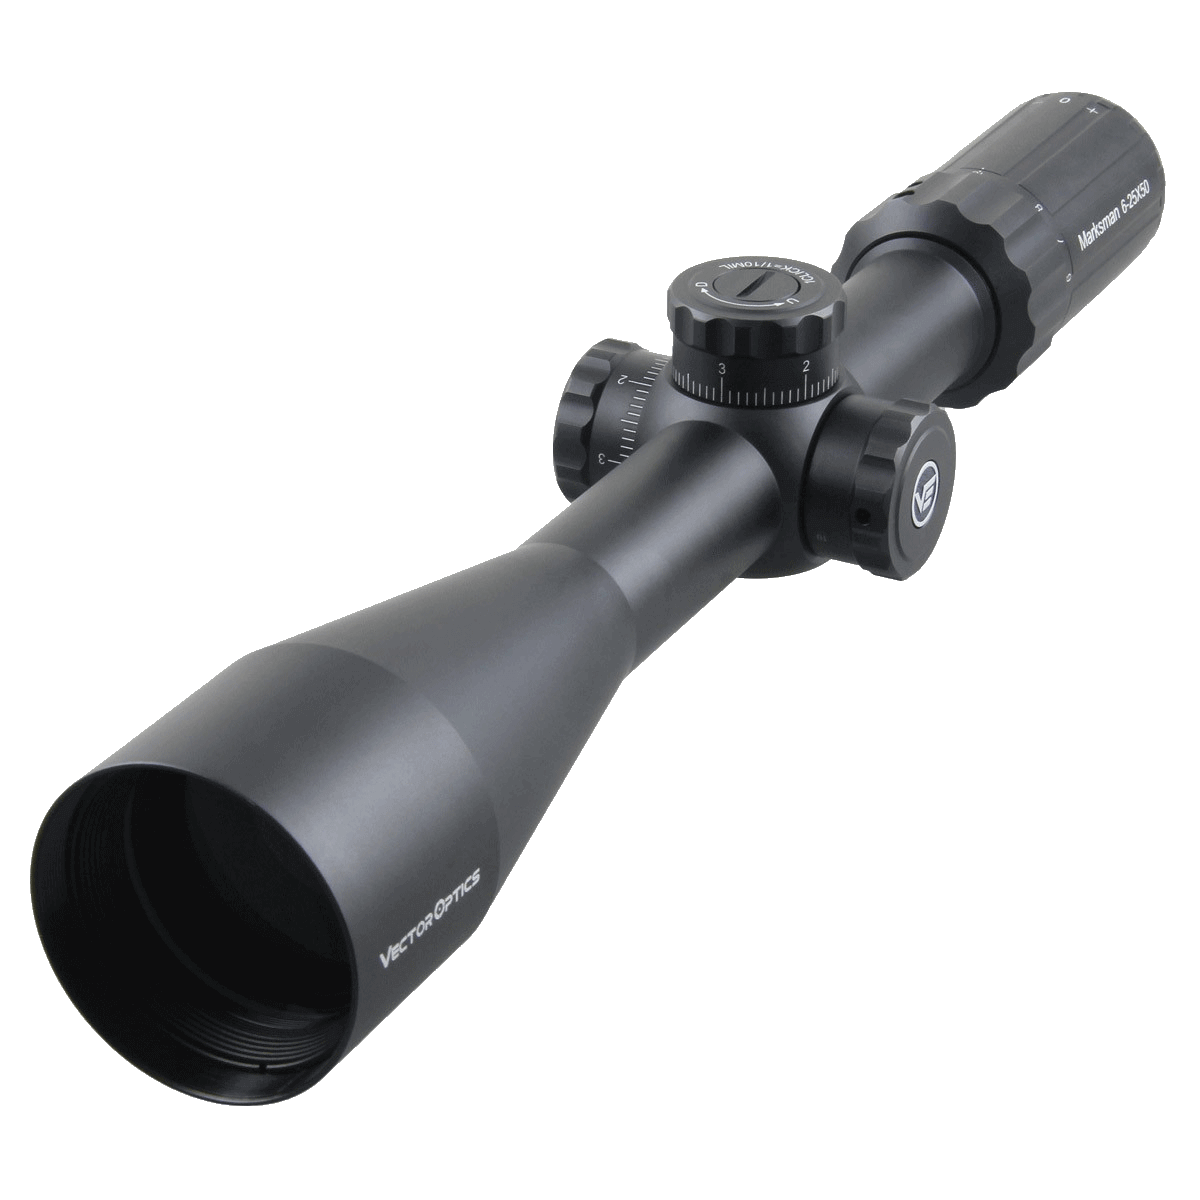 Marksman 6-25x50SFP Riflescope